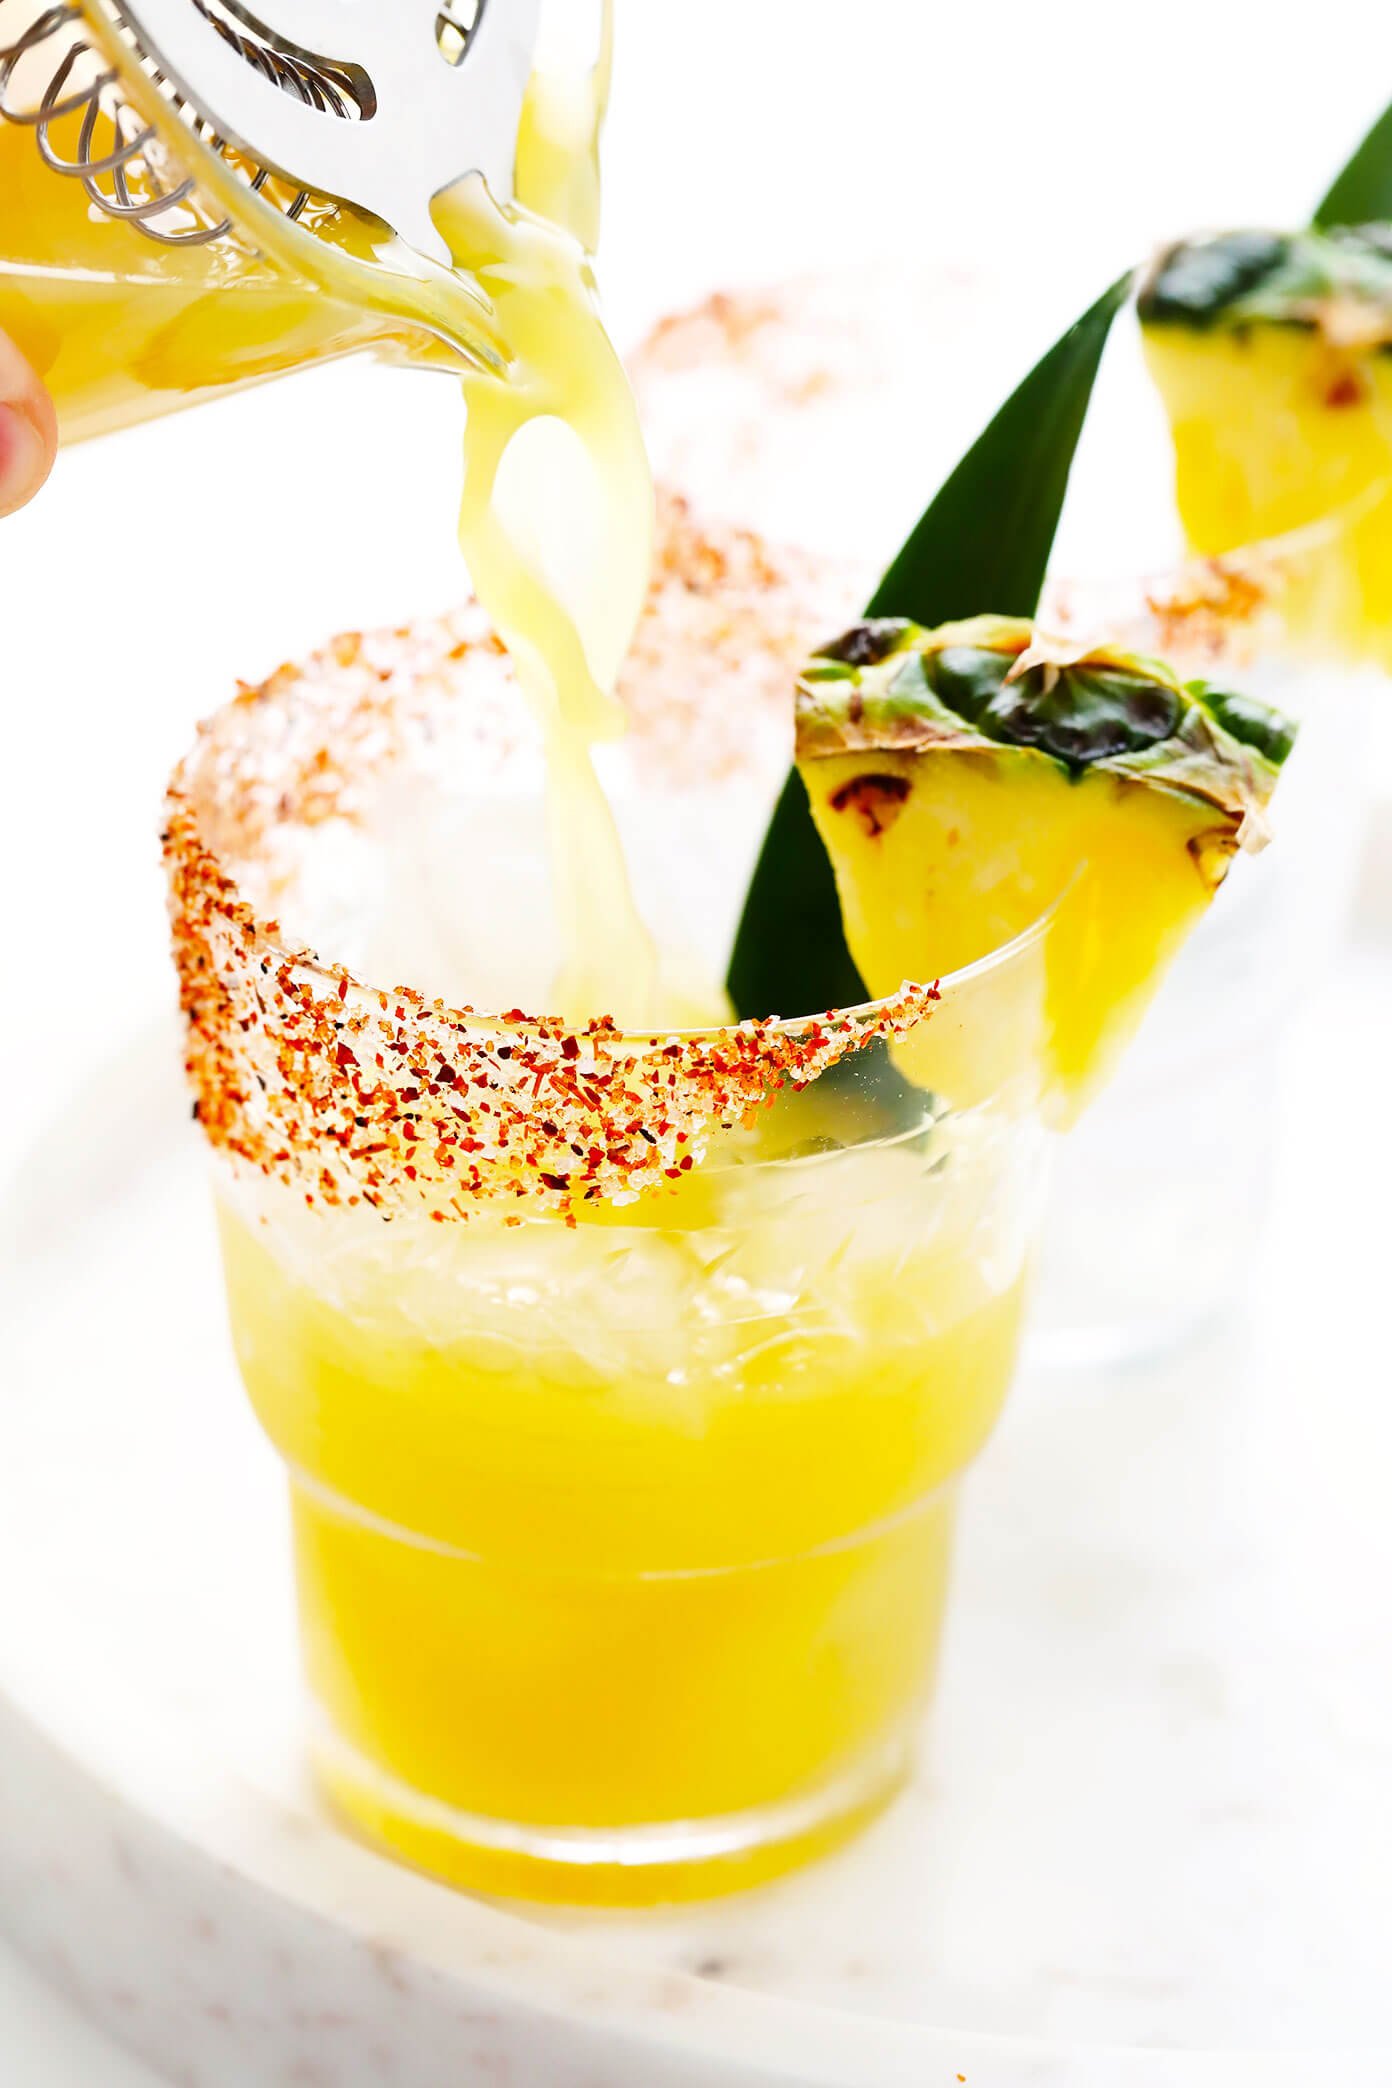 How To Make a Pineapple Margarita